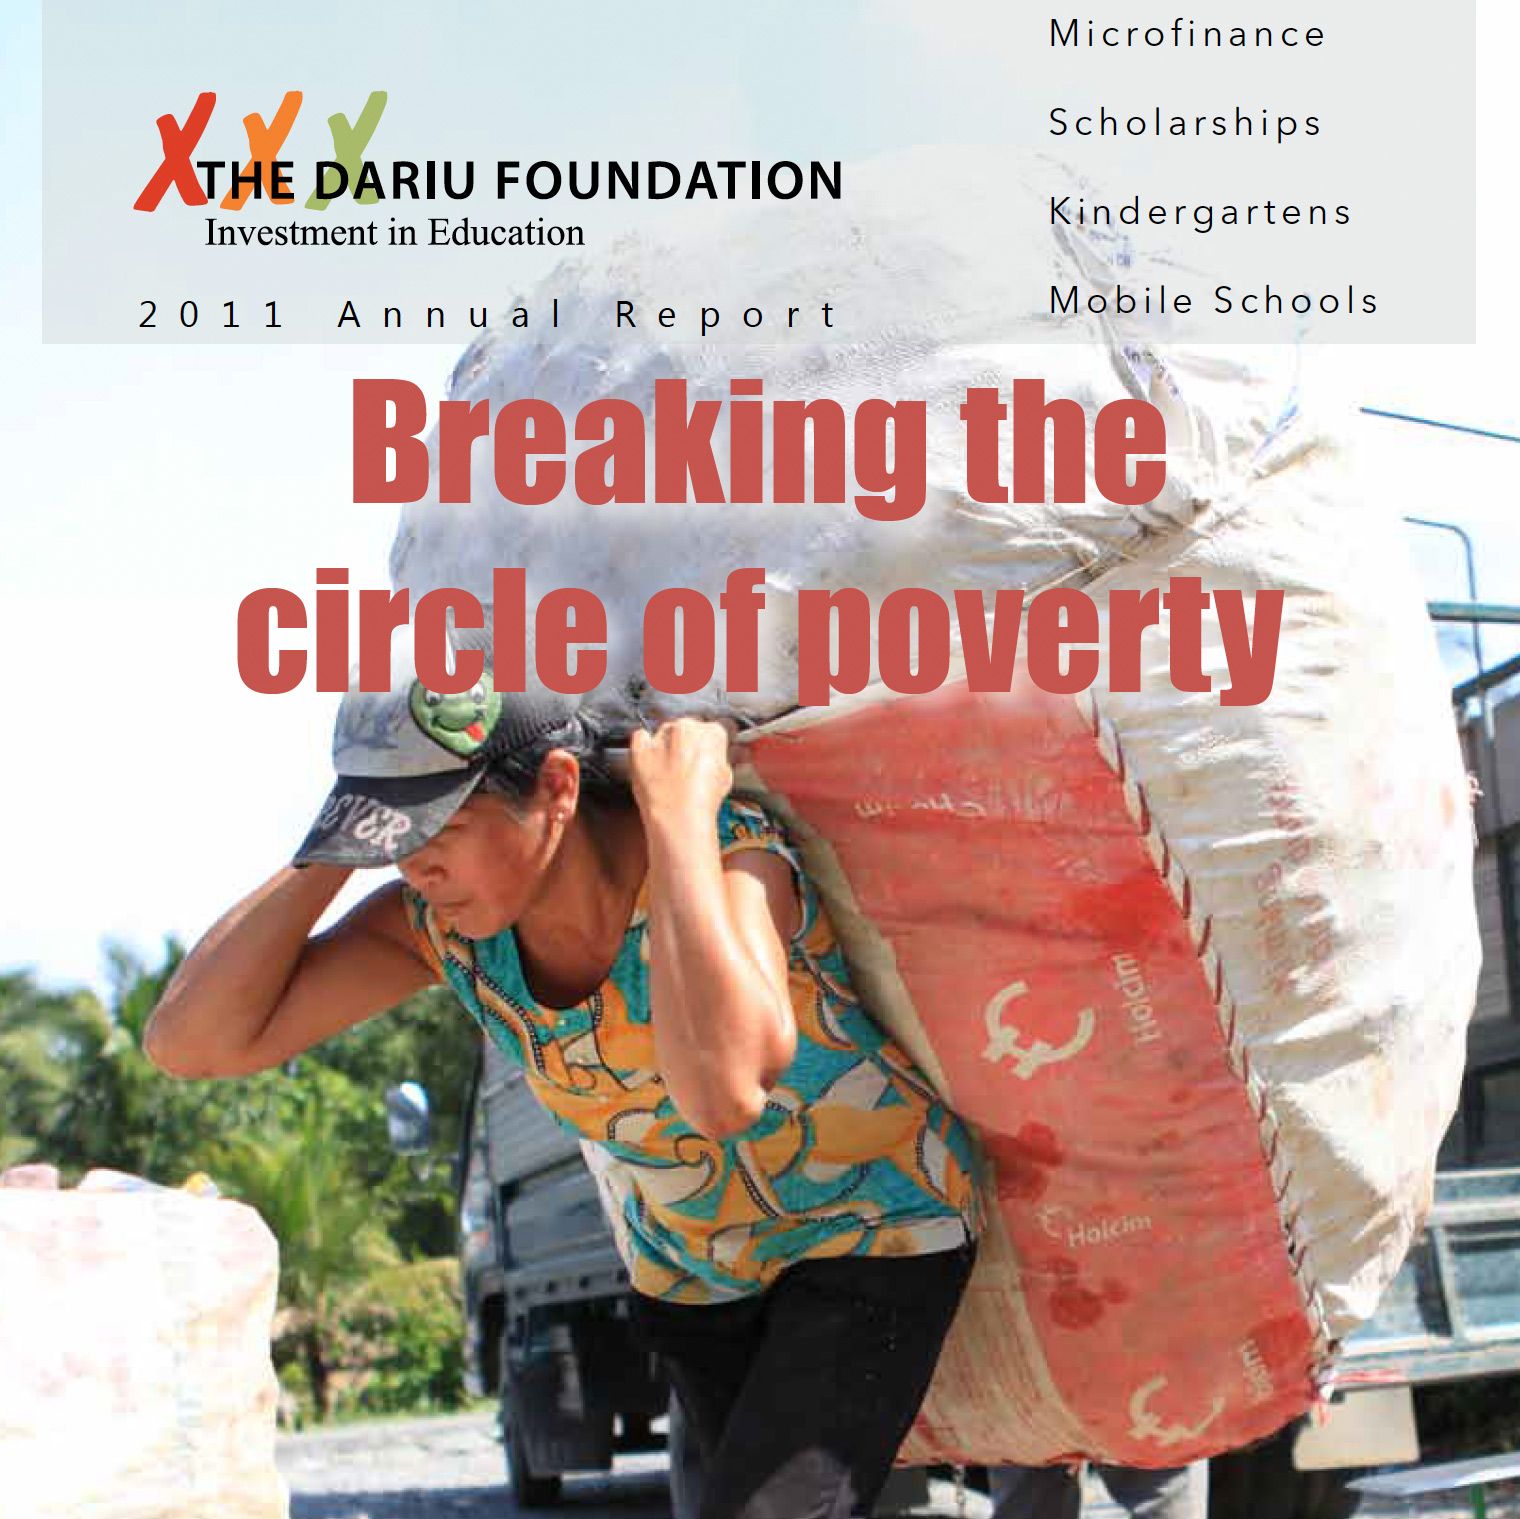 Dariu Foundation - Jahresbericht - 2011